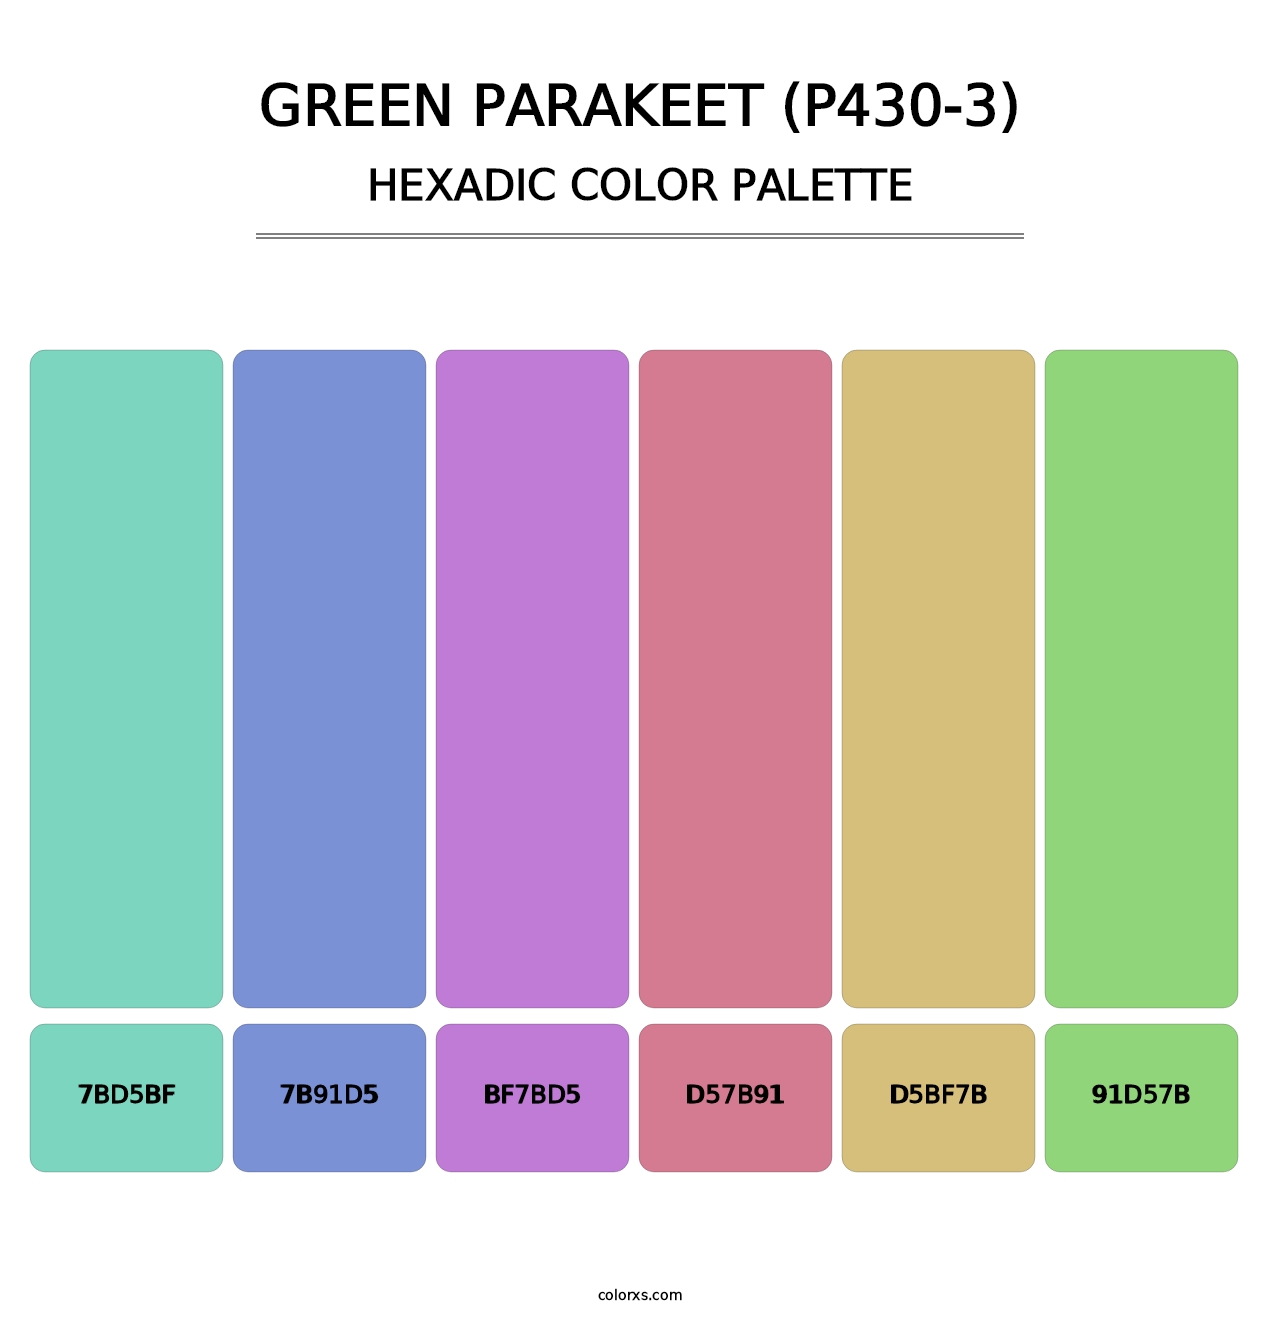 Green Parakeet (P430-3) - Hexadic Color Palette